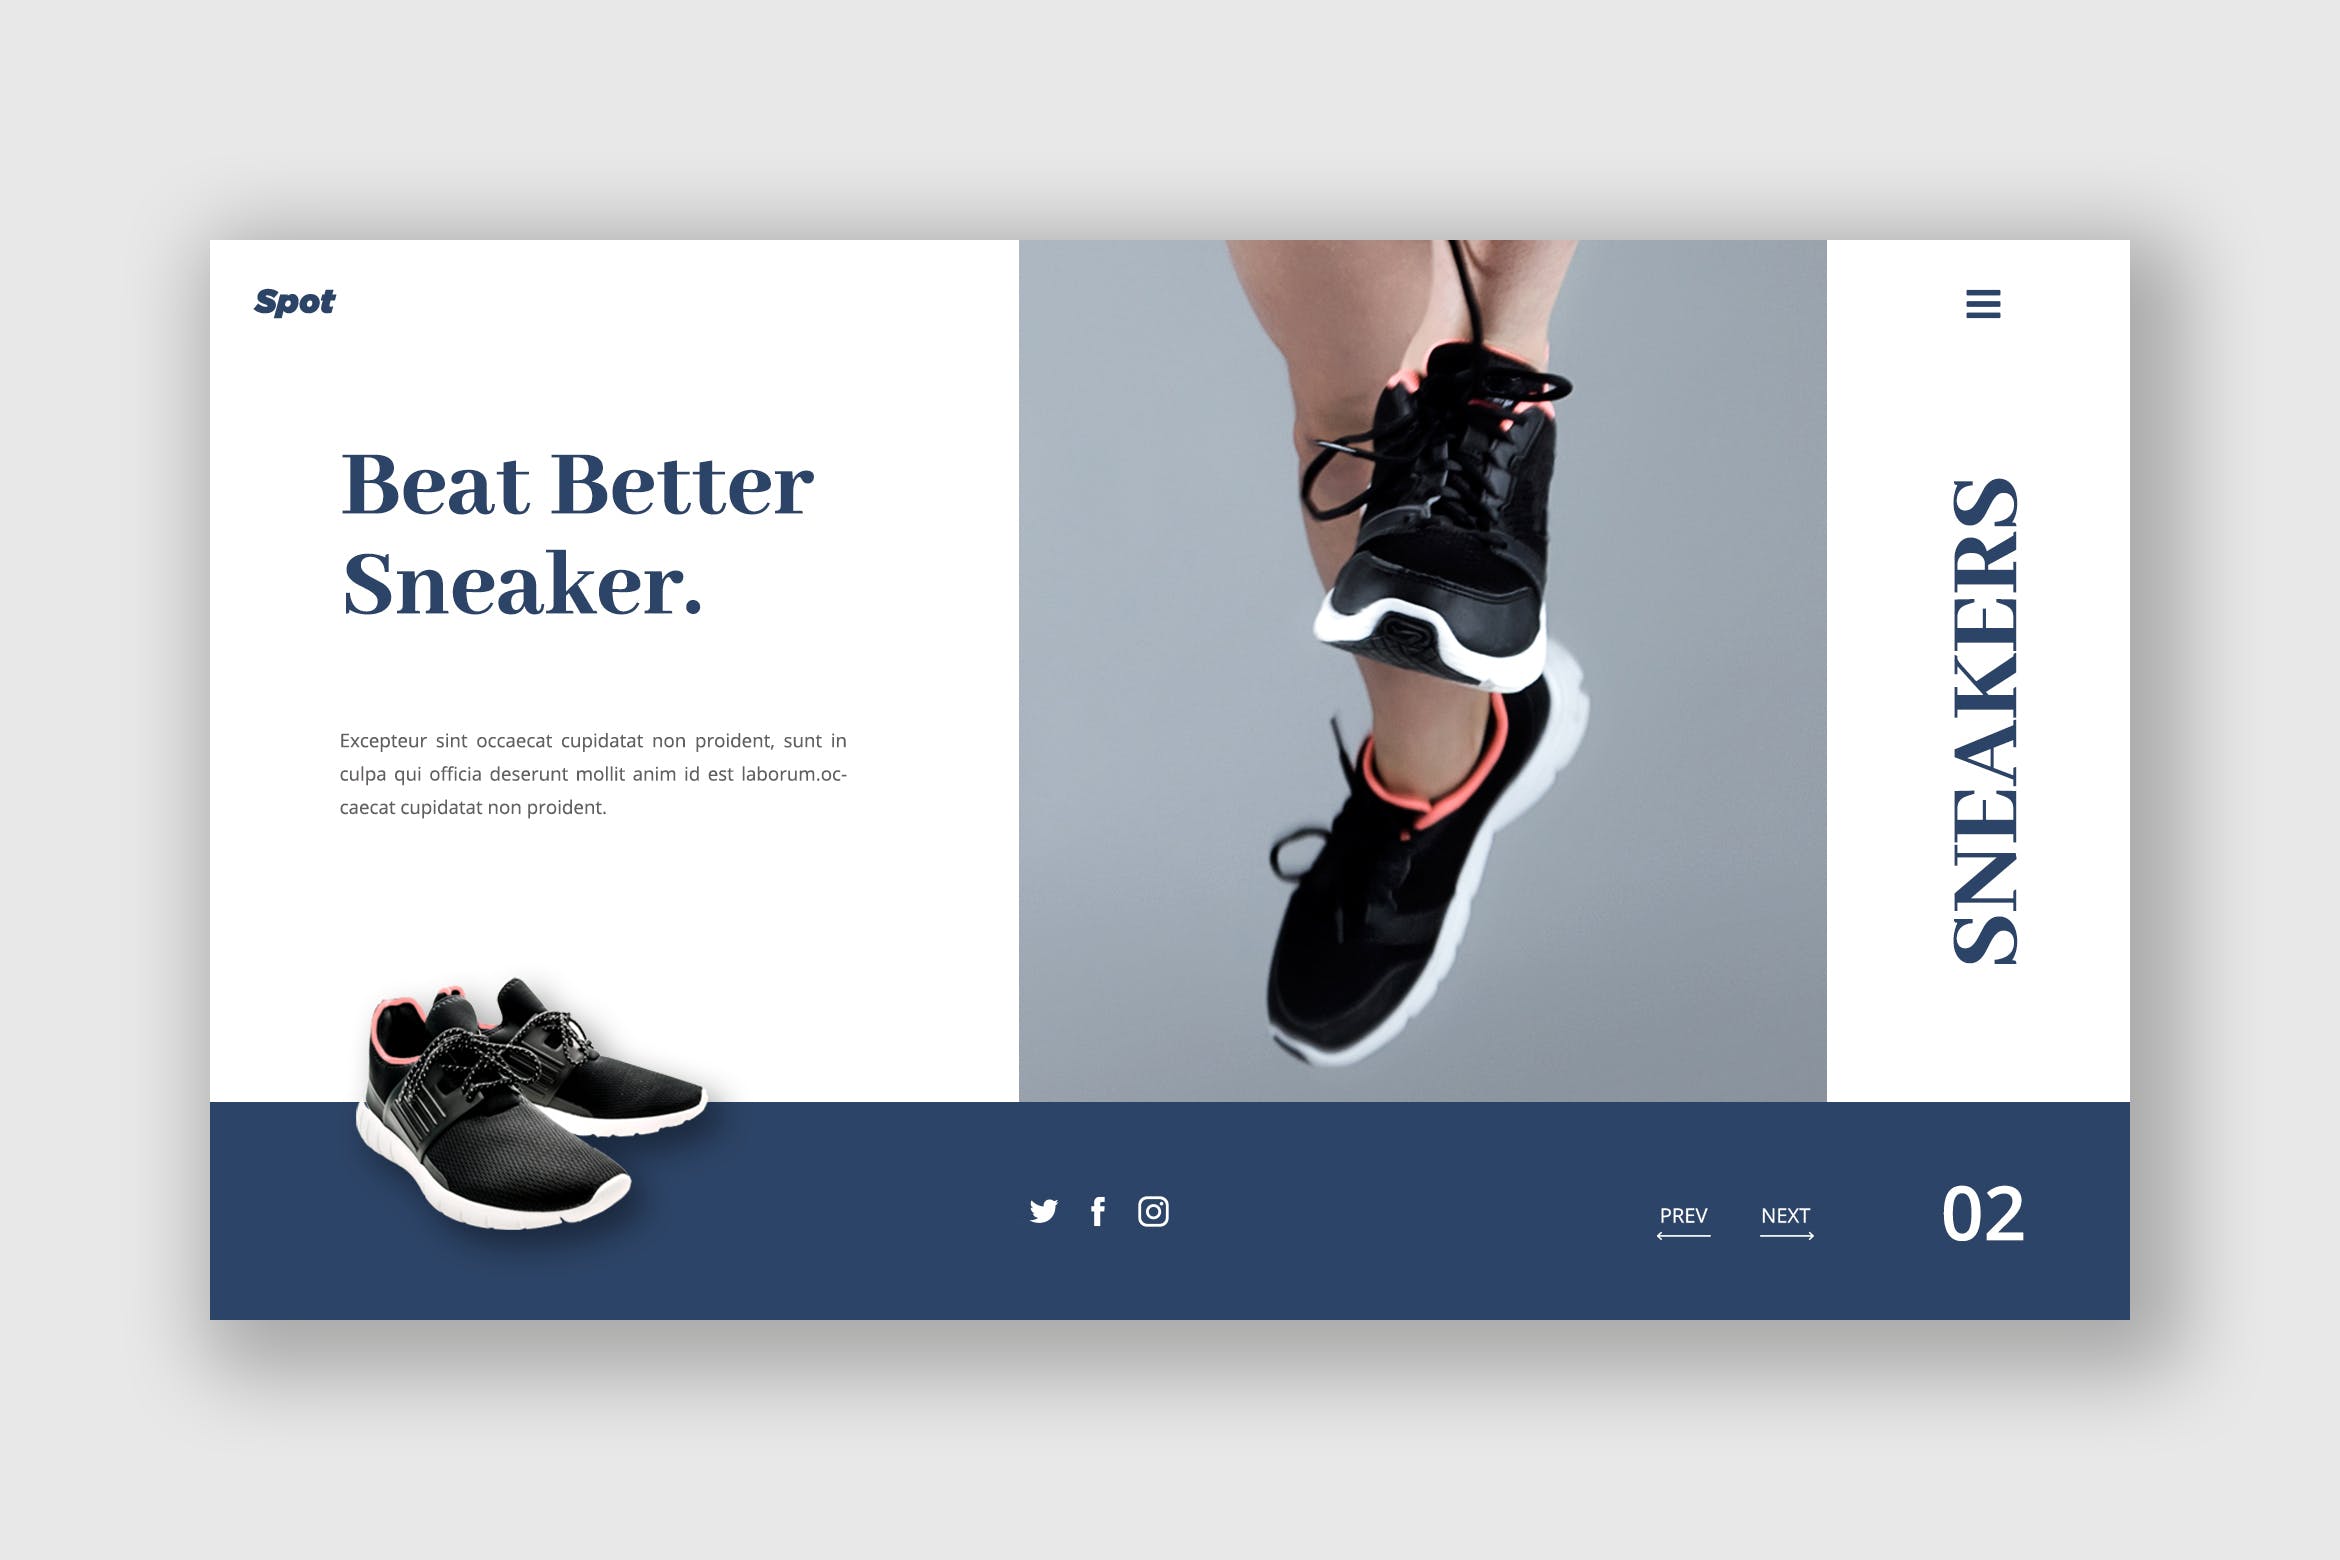 运动鞋品牌网站巨无霸Header设计模板 Footwear Ecommerce Hero Header Template插图